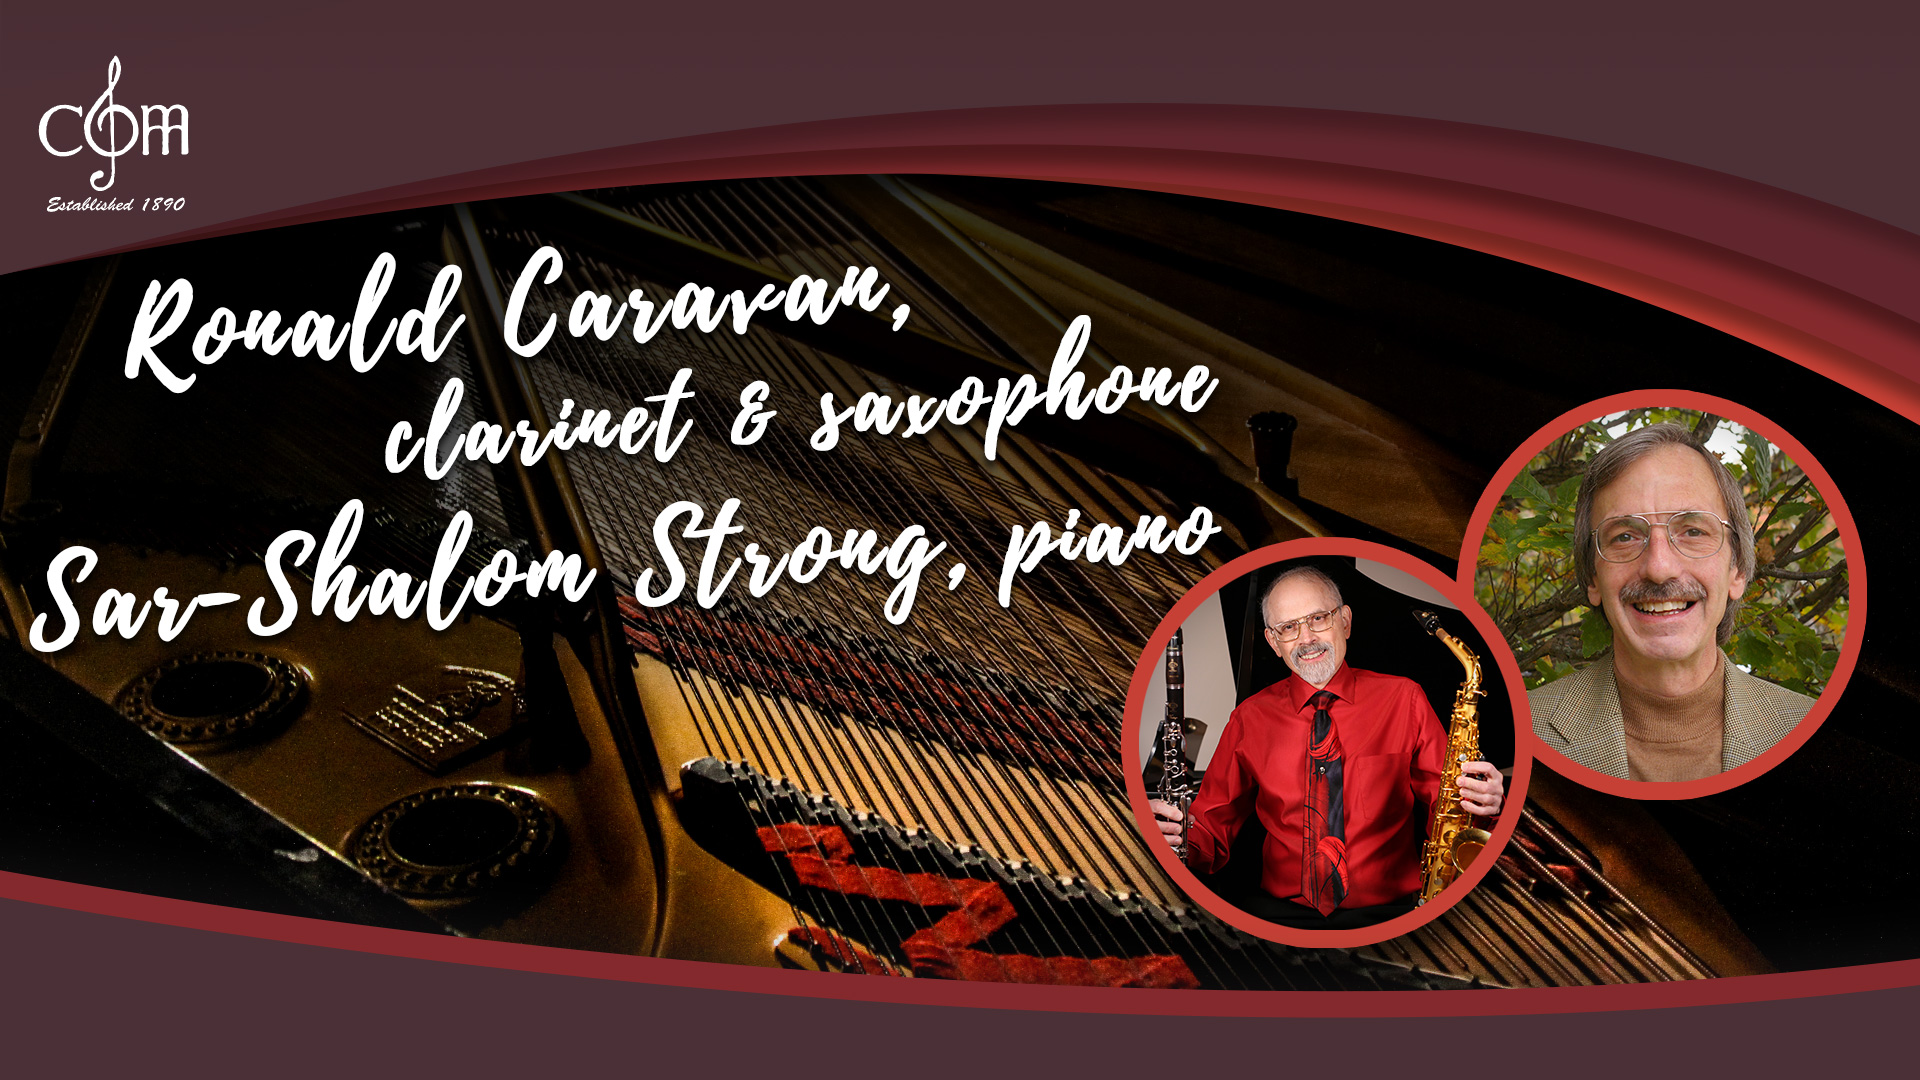 Ronald Caravan, clarinet & saxophone; Sar-Shalom Strong, piano